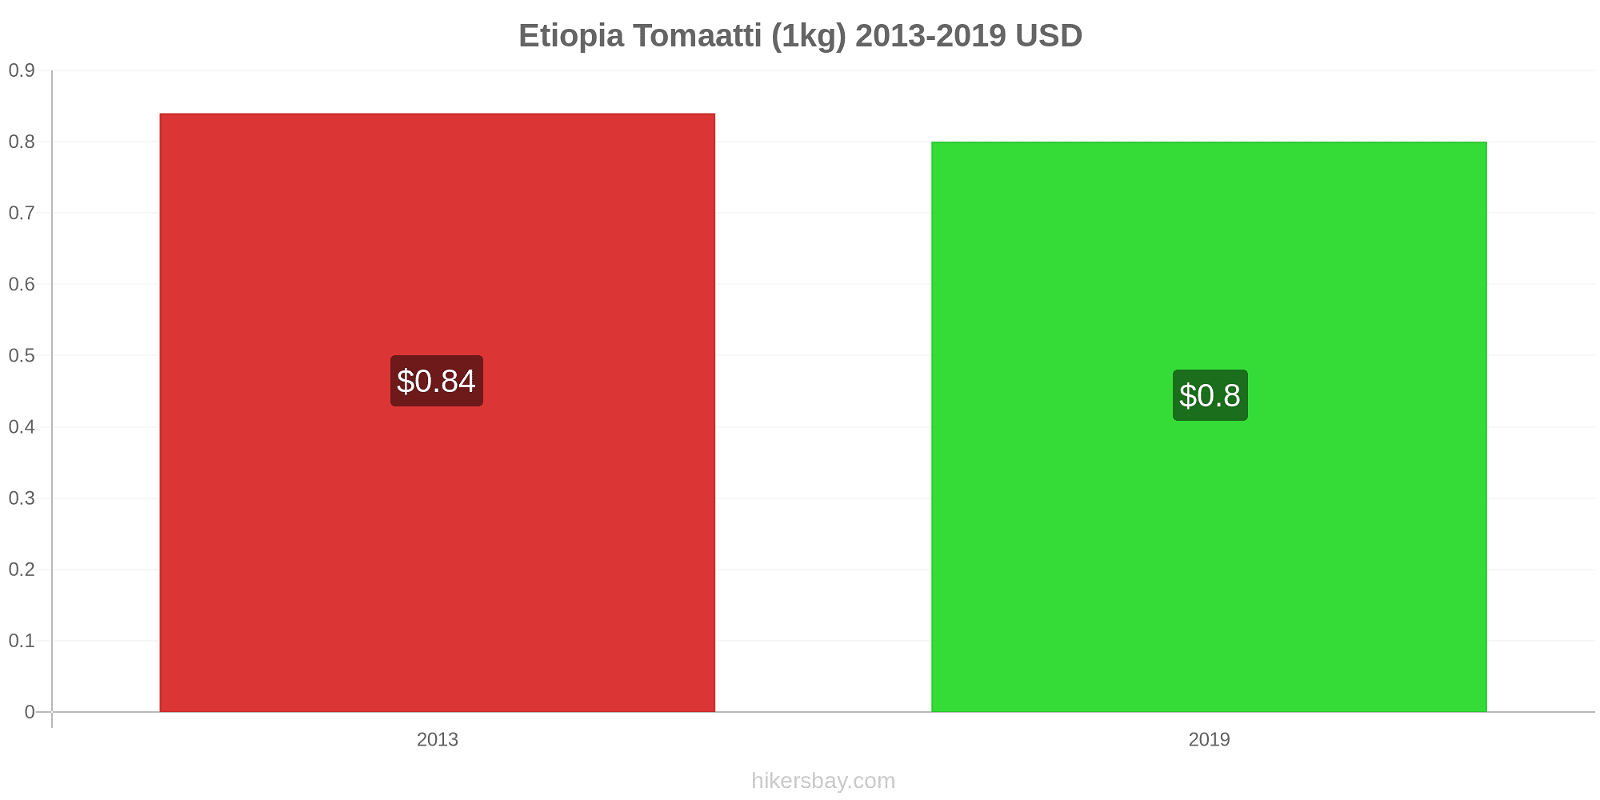 Etiopia hintojen muutokset Tomaatti (1kg) hikersbay.com